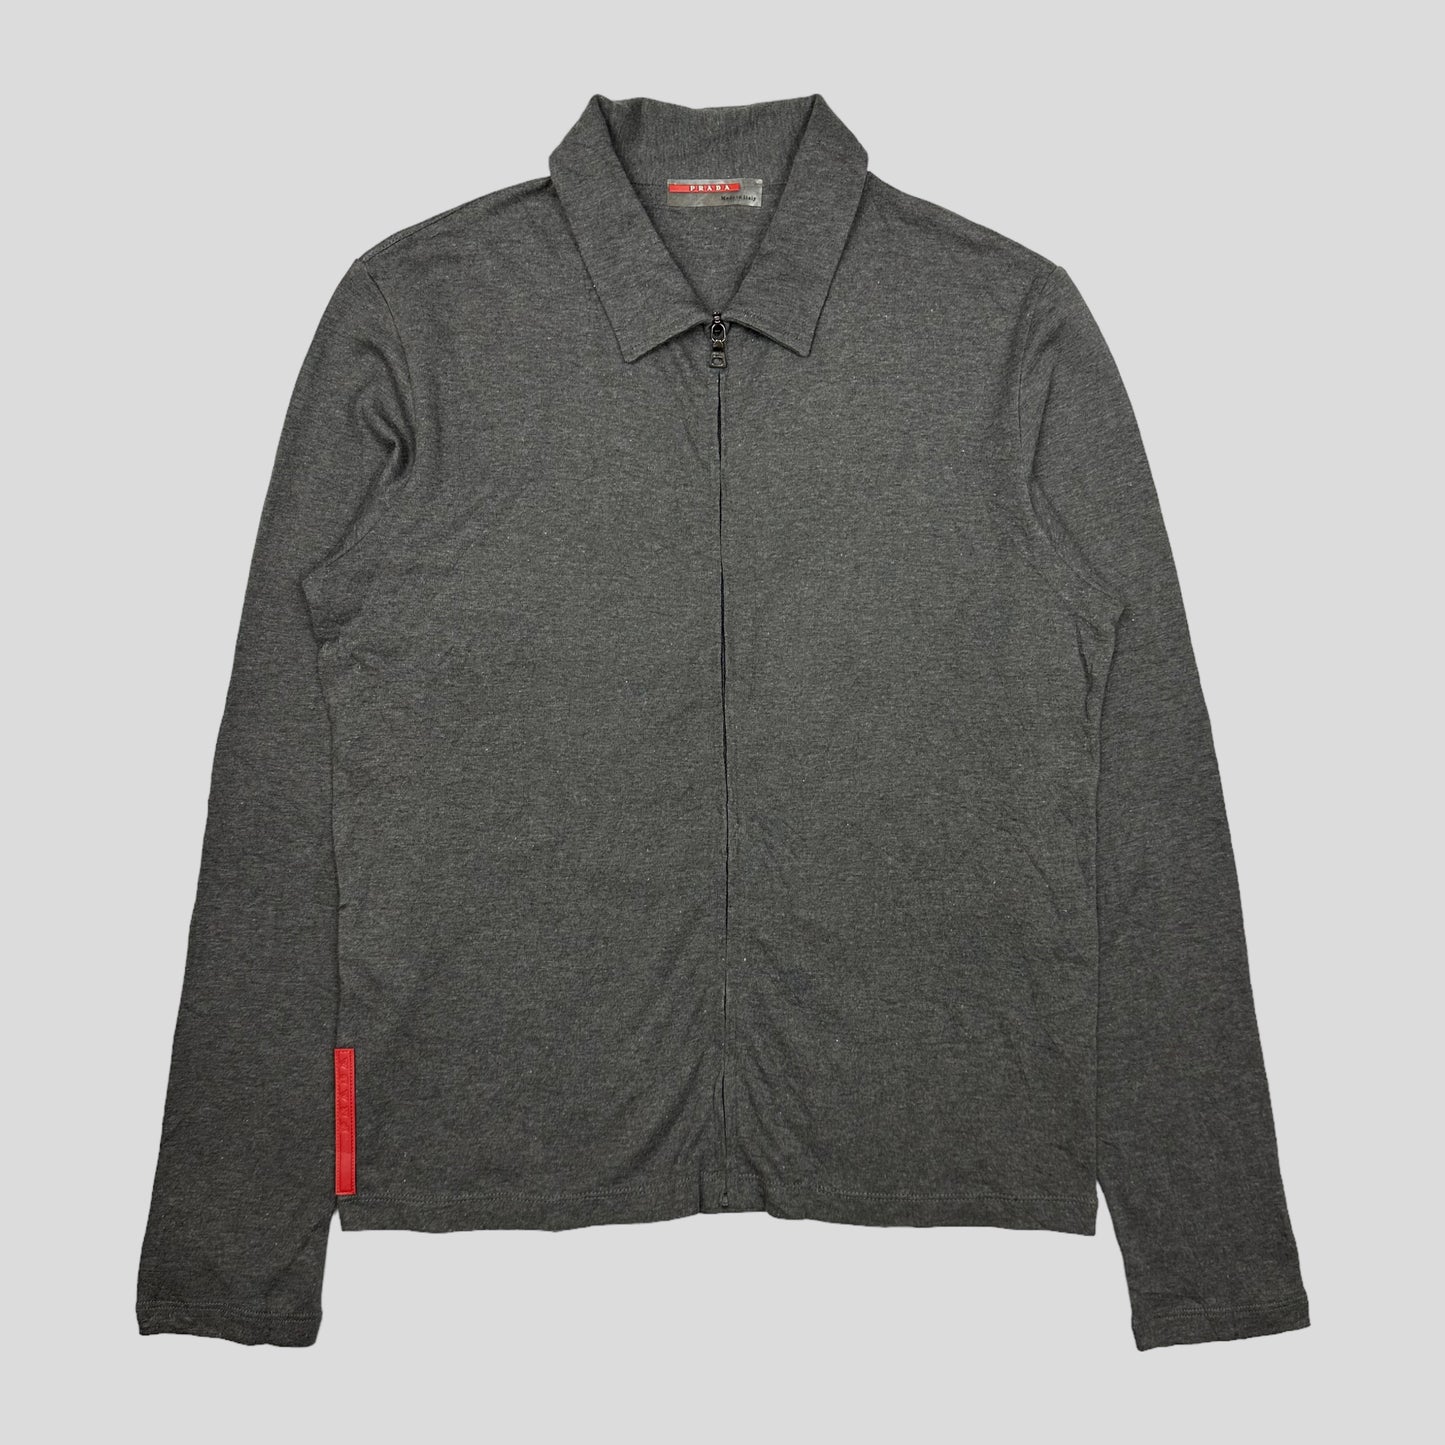 Prada Sport SS99 Grey Zip Shirt - 8